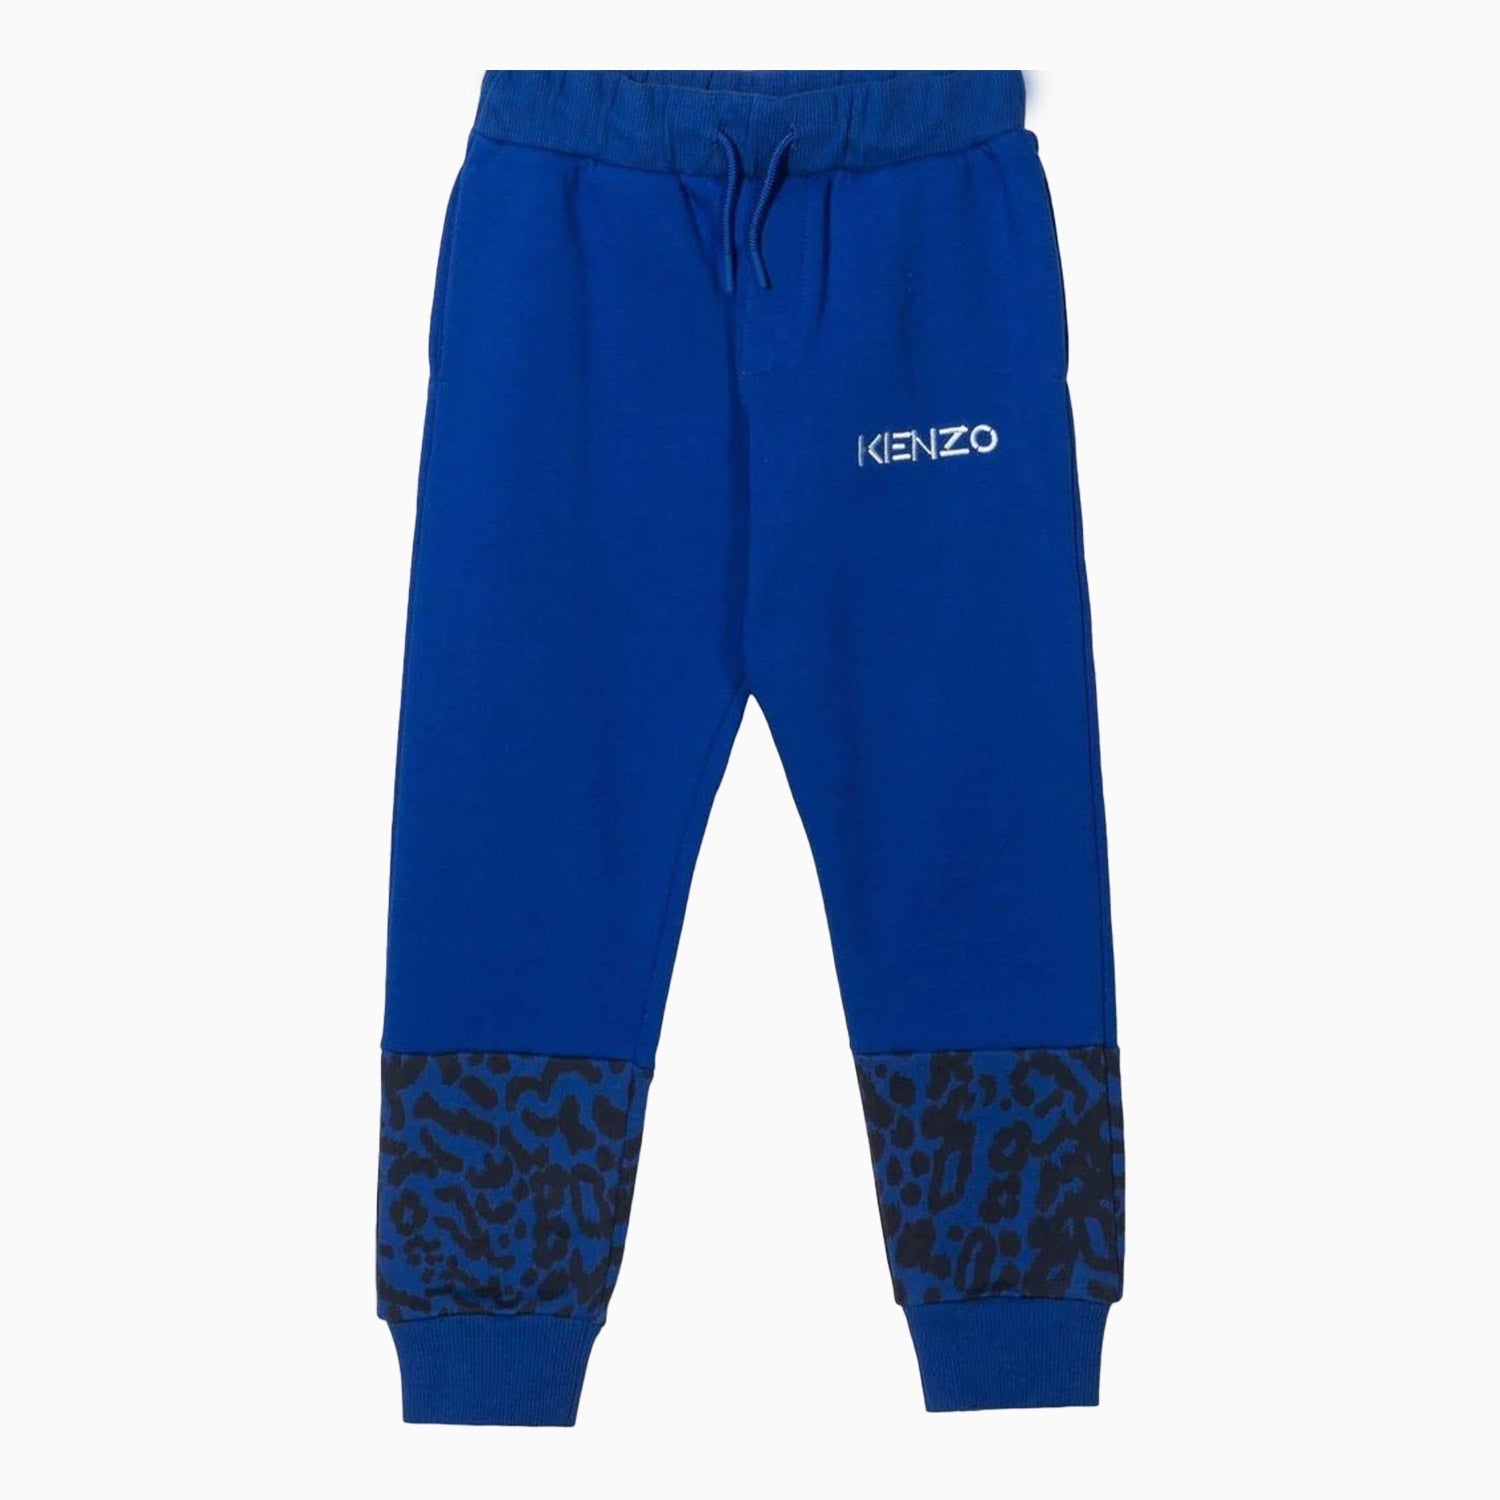 Kenzo Kid's No Brushed Pant - Color: Blue - Kids Premium Clothing -